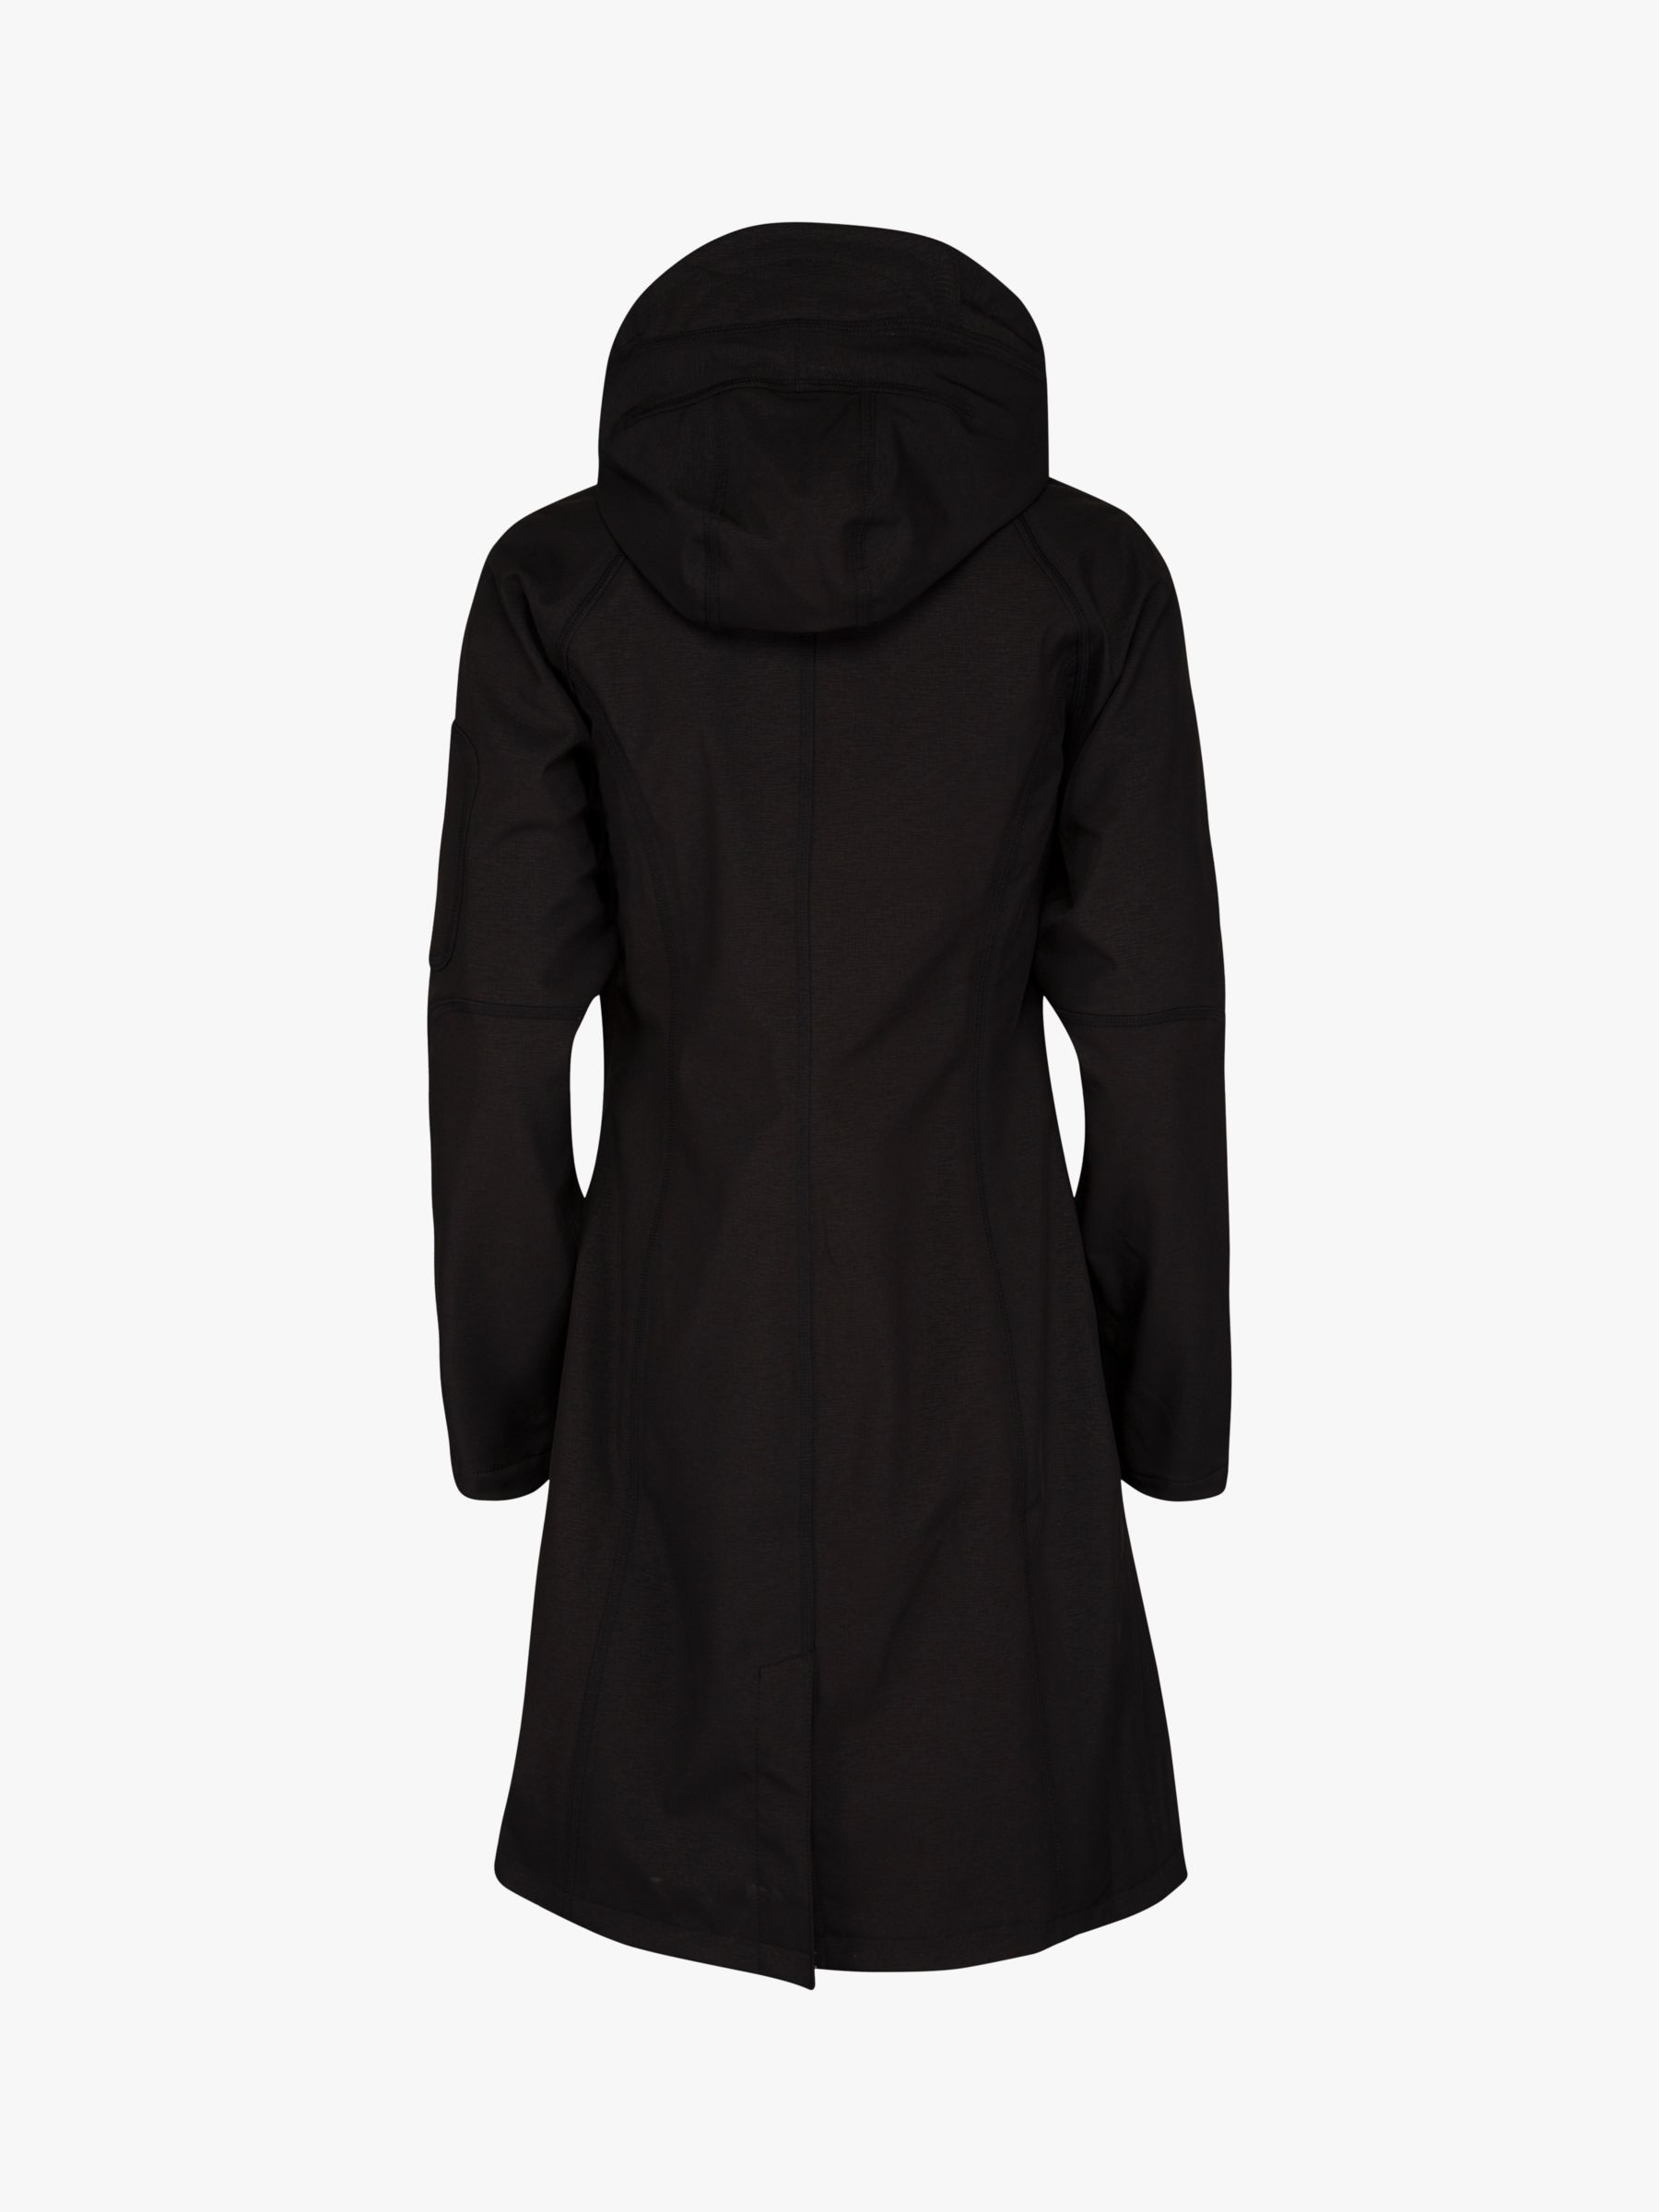 Ilse Jacobsen Hornbæk 37 Long Raincoat, Black at John Lewis & Partners